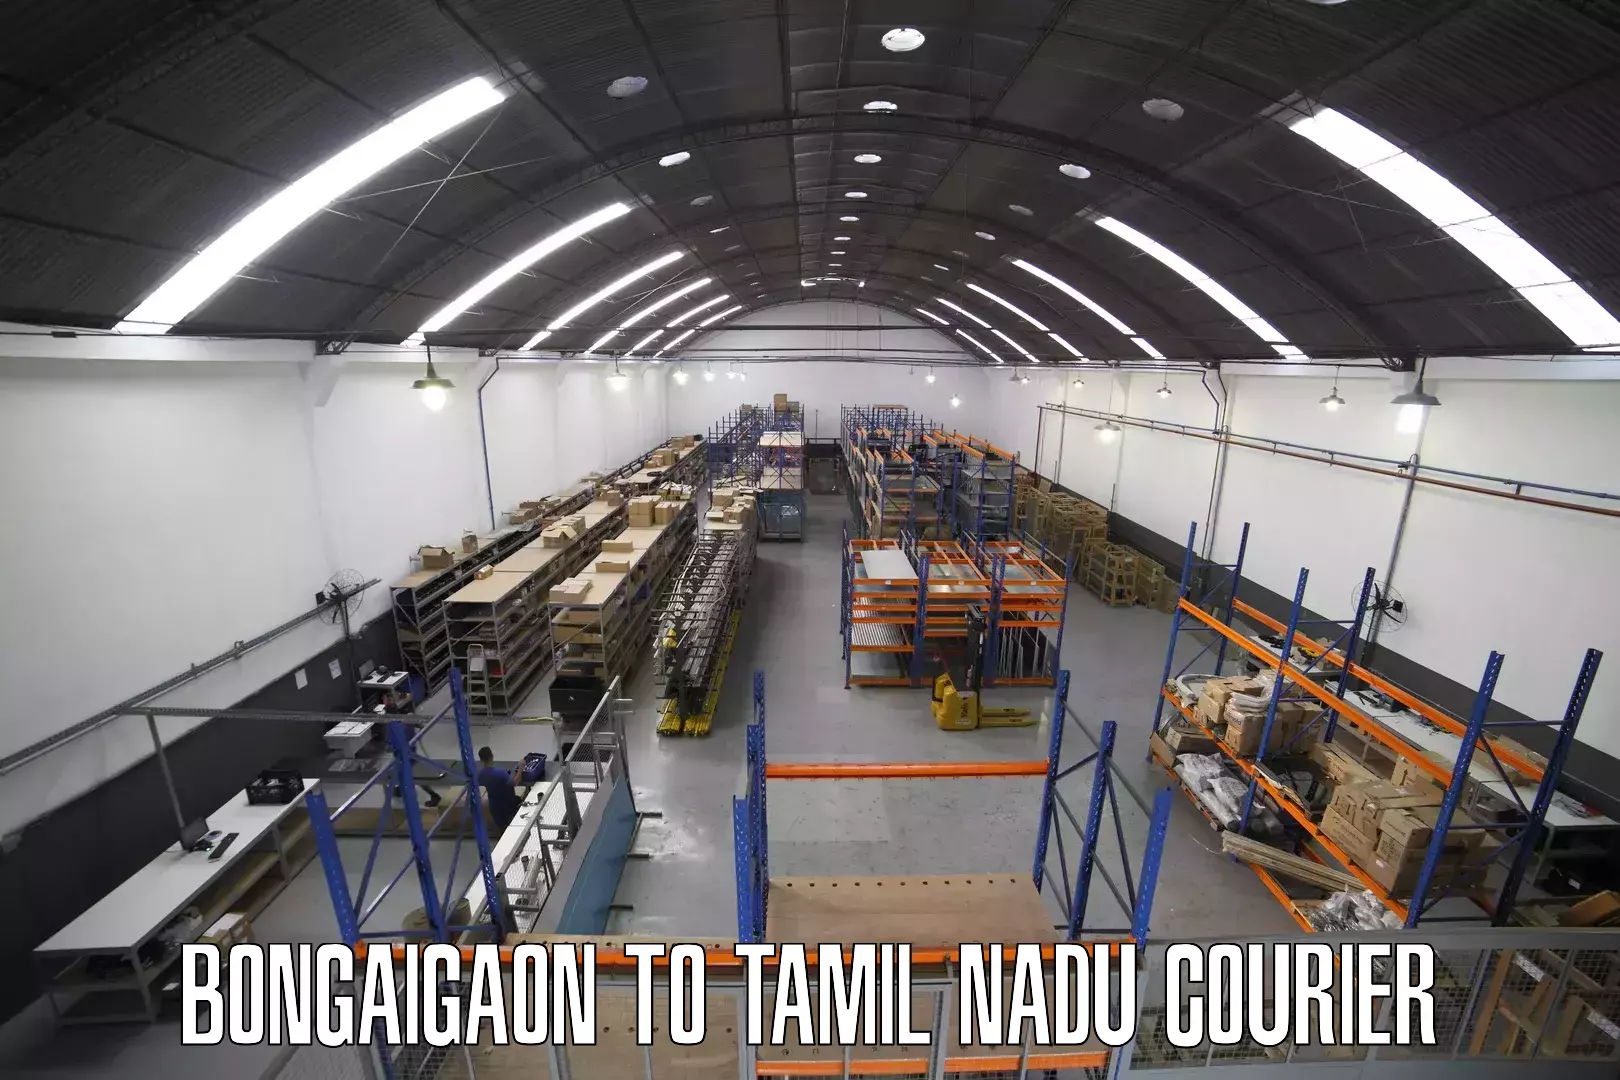 Efficient order fulfillment Bongaigaon to Tamil Nadu